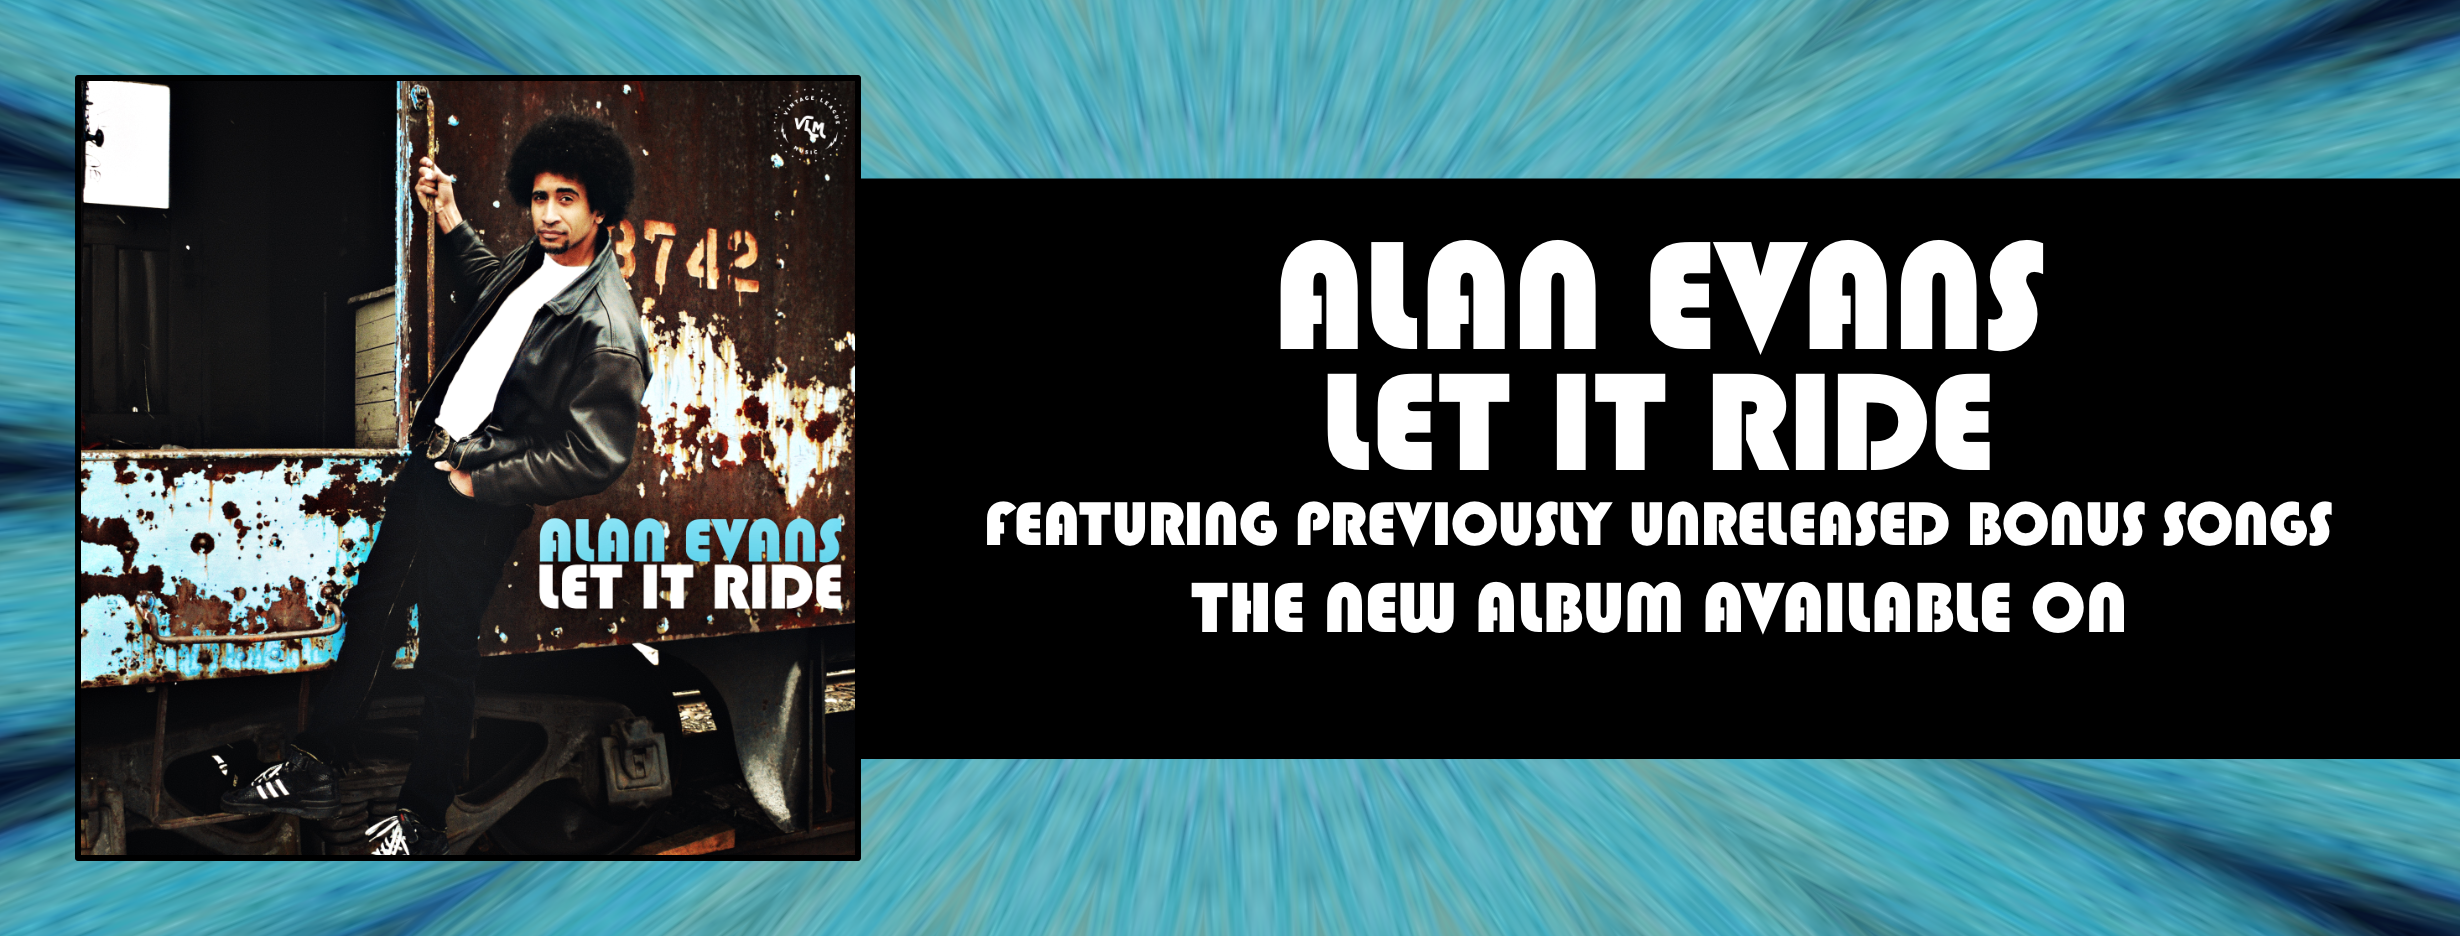 Alan Evans - Let It Ride banner@3x.png